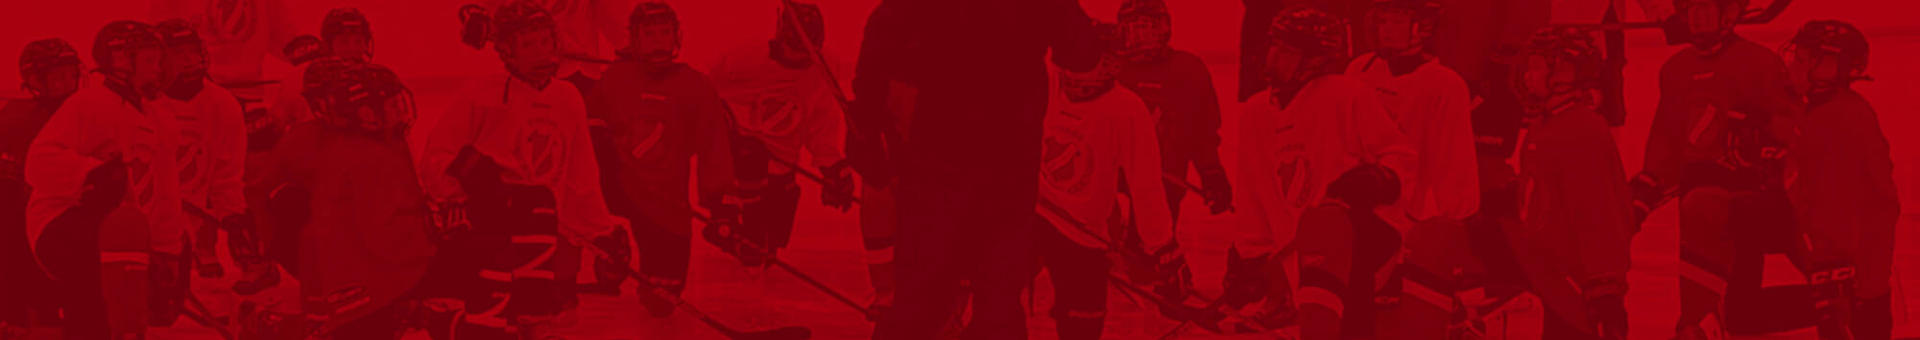 tyreso-hanviken-hockey-background_tp.jpg